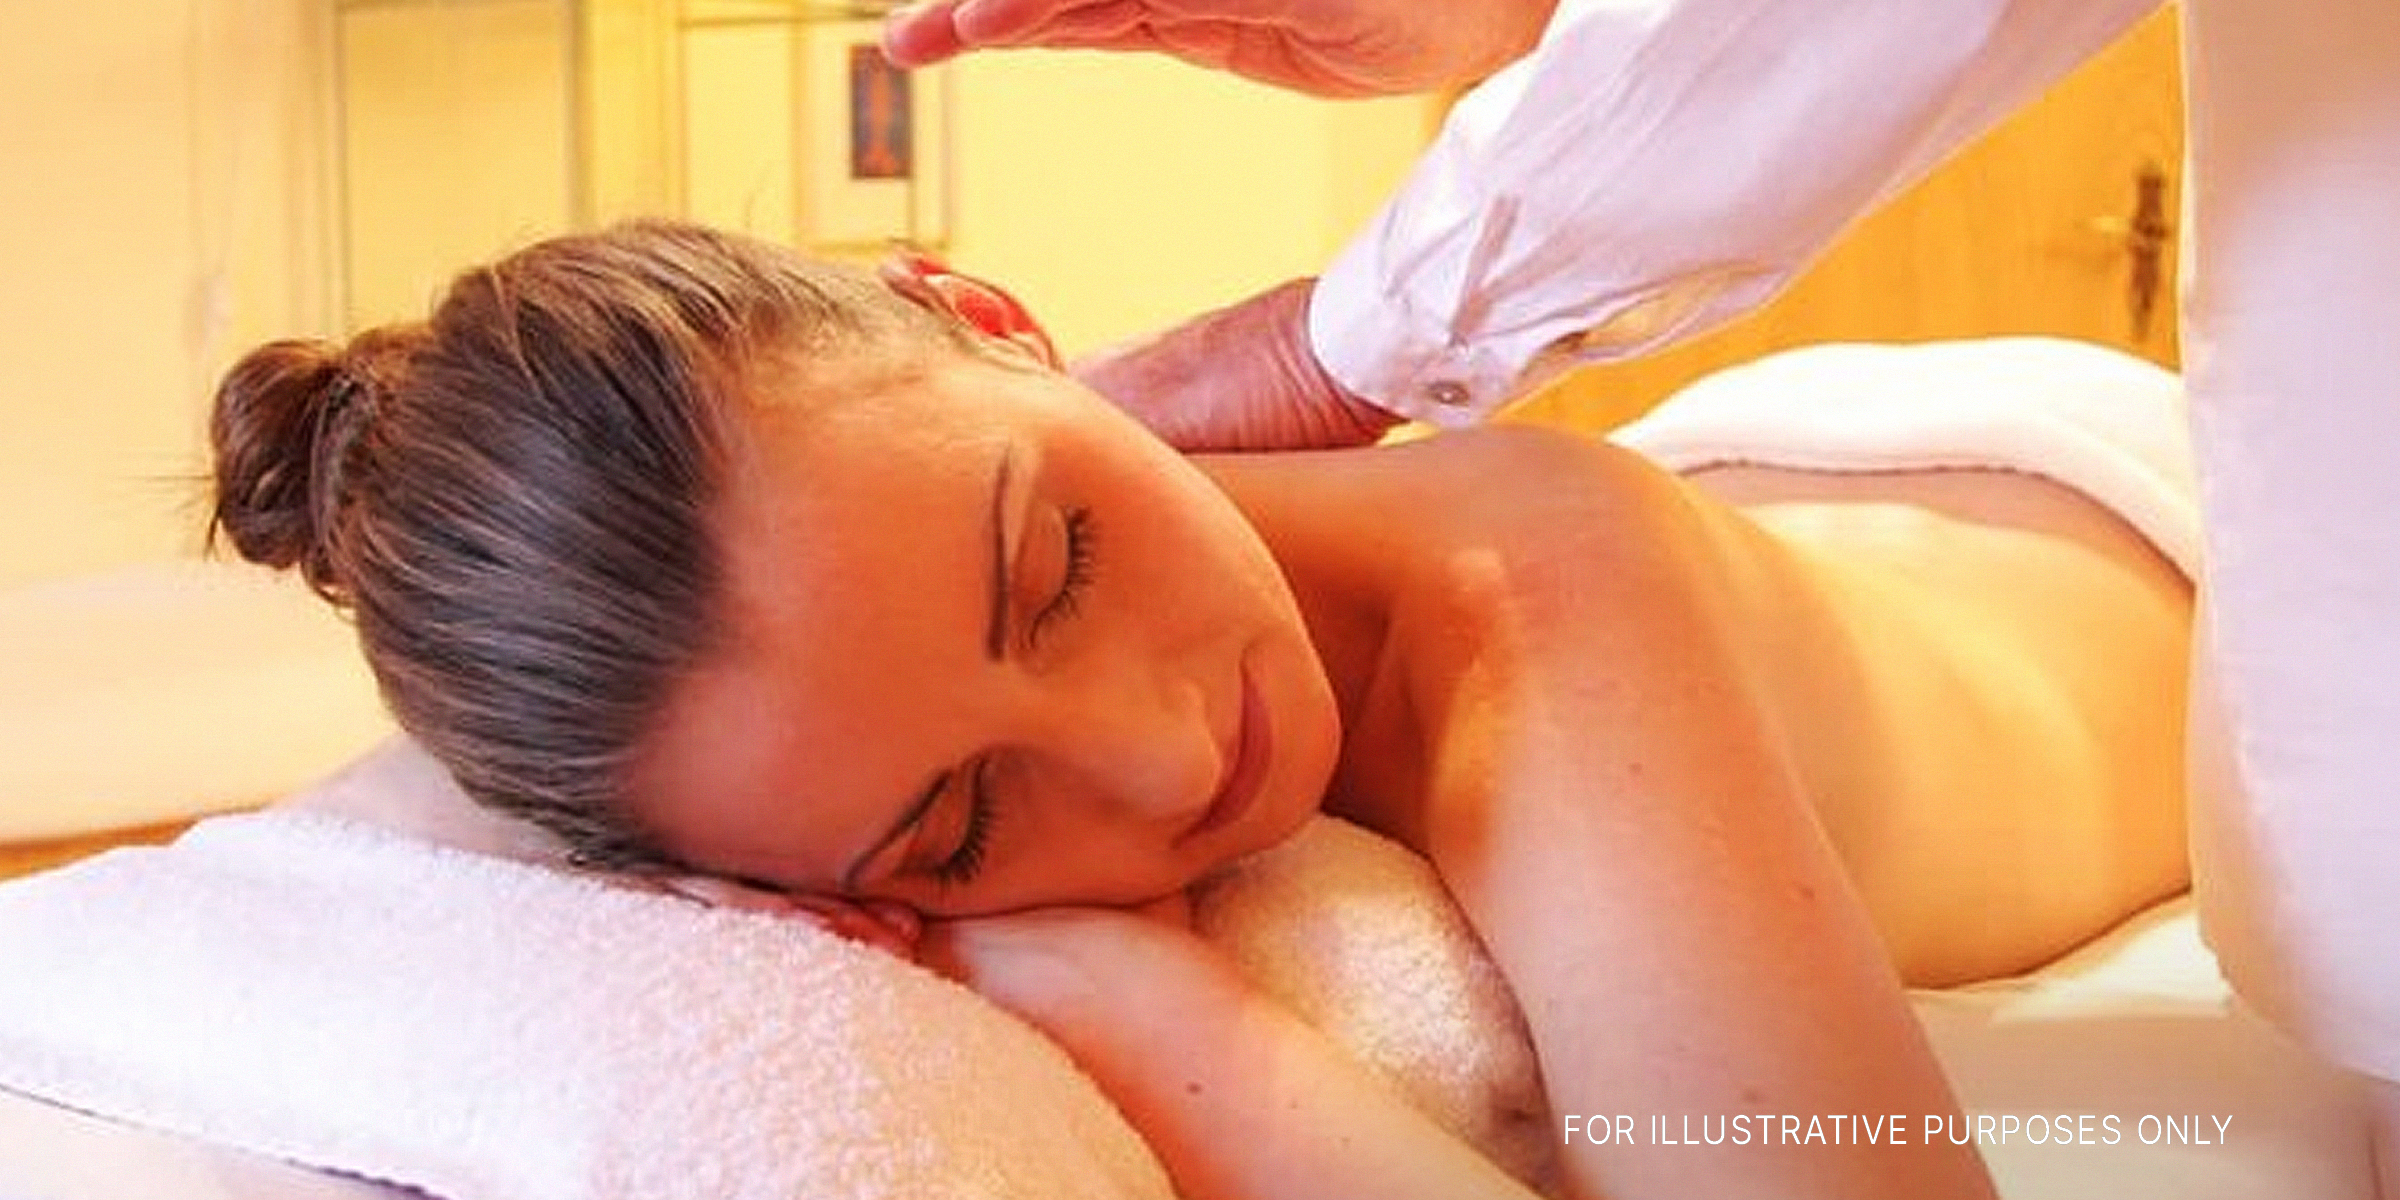 Woman getting a back massage | Source: flickr.com/(Public Domain) by samuelemunemu321